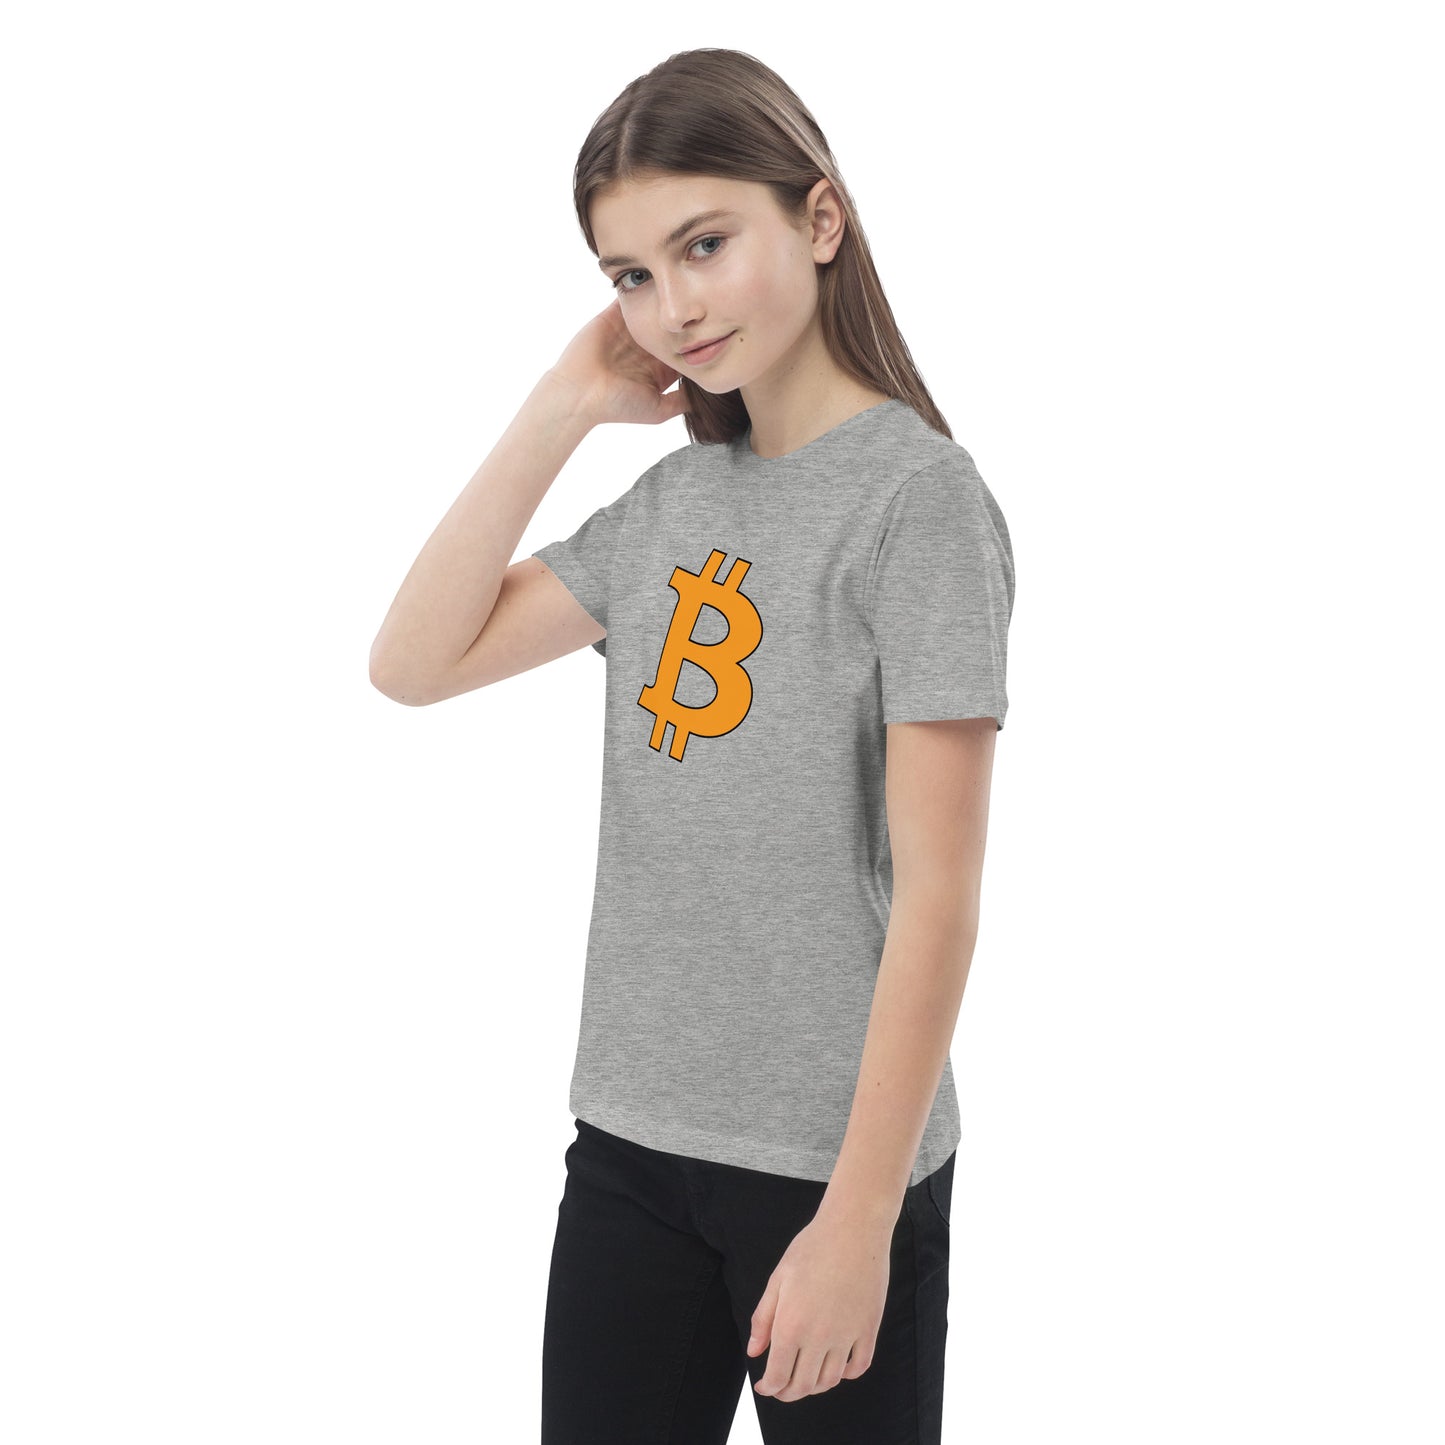 Camiseta infantil de algodón orgánico "B"